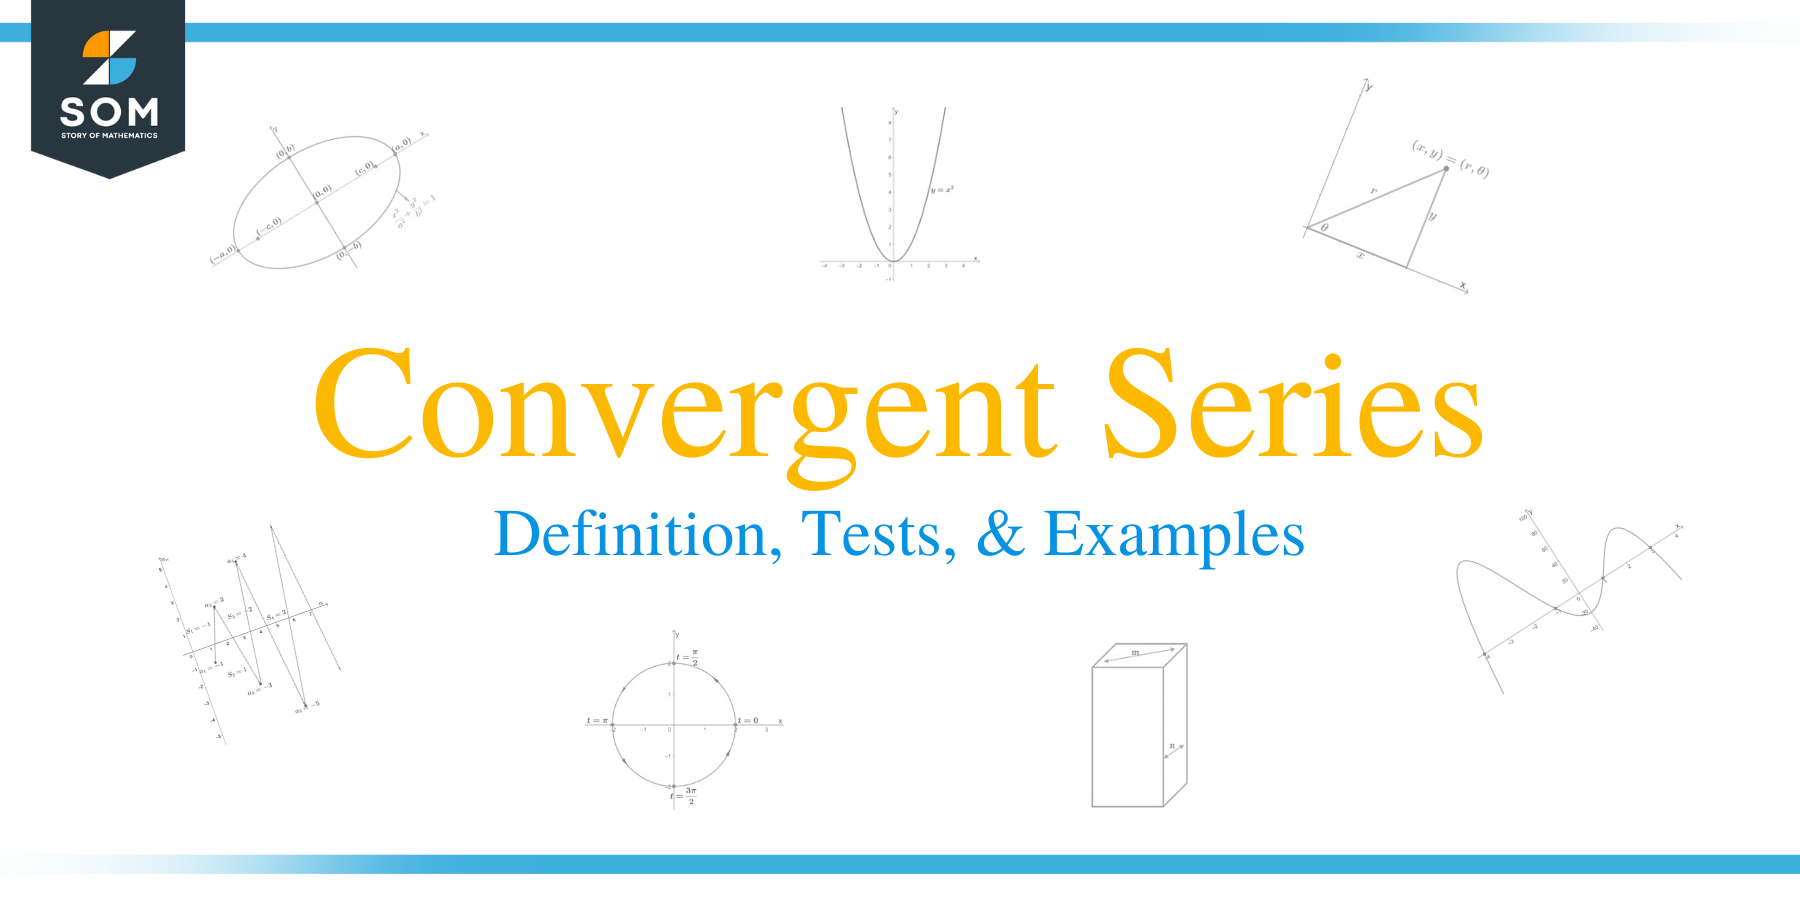 Convergent series